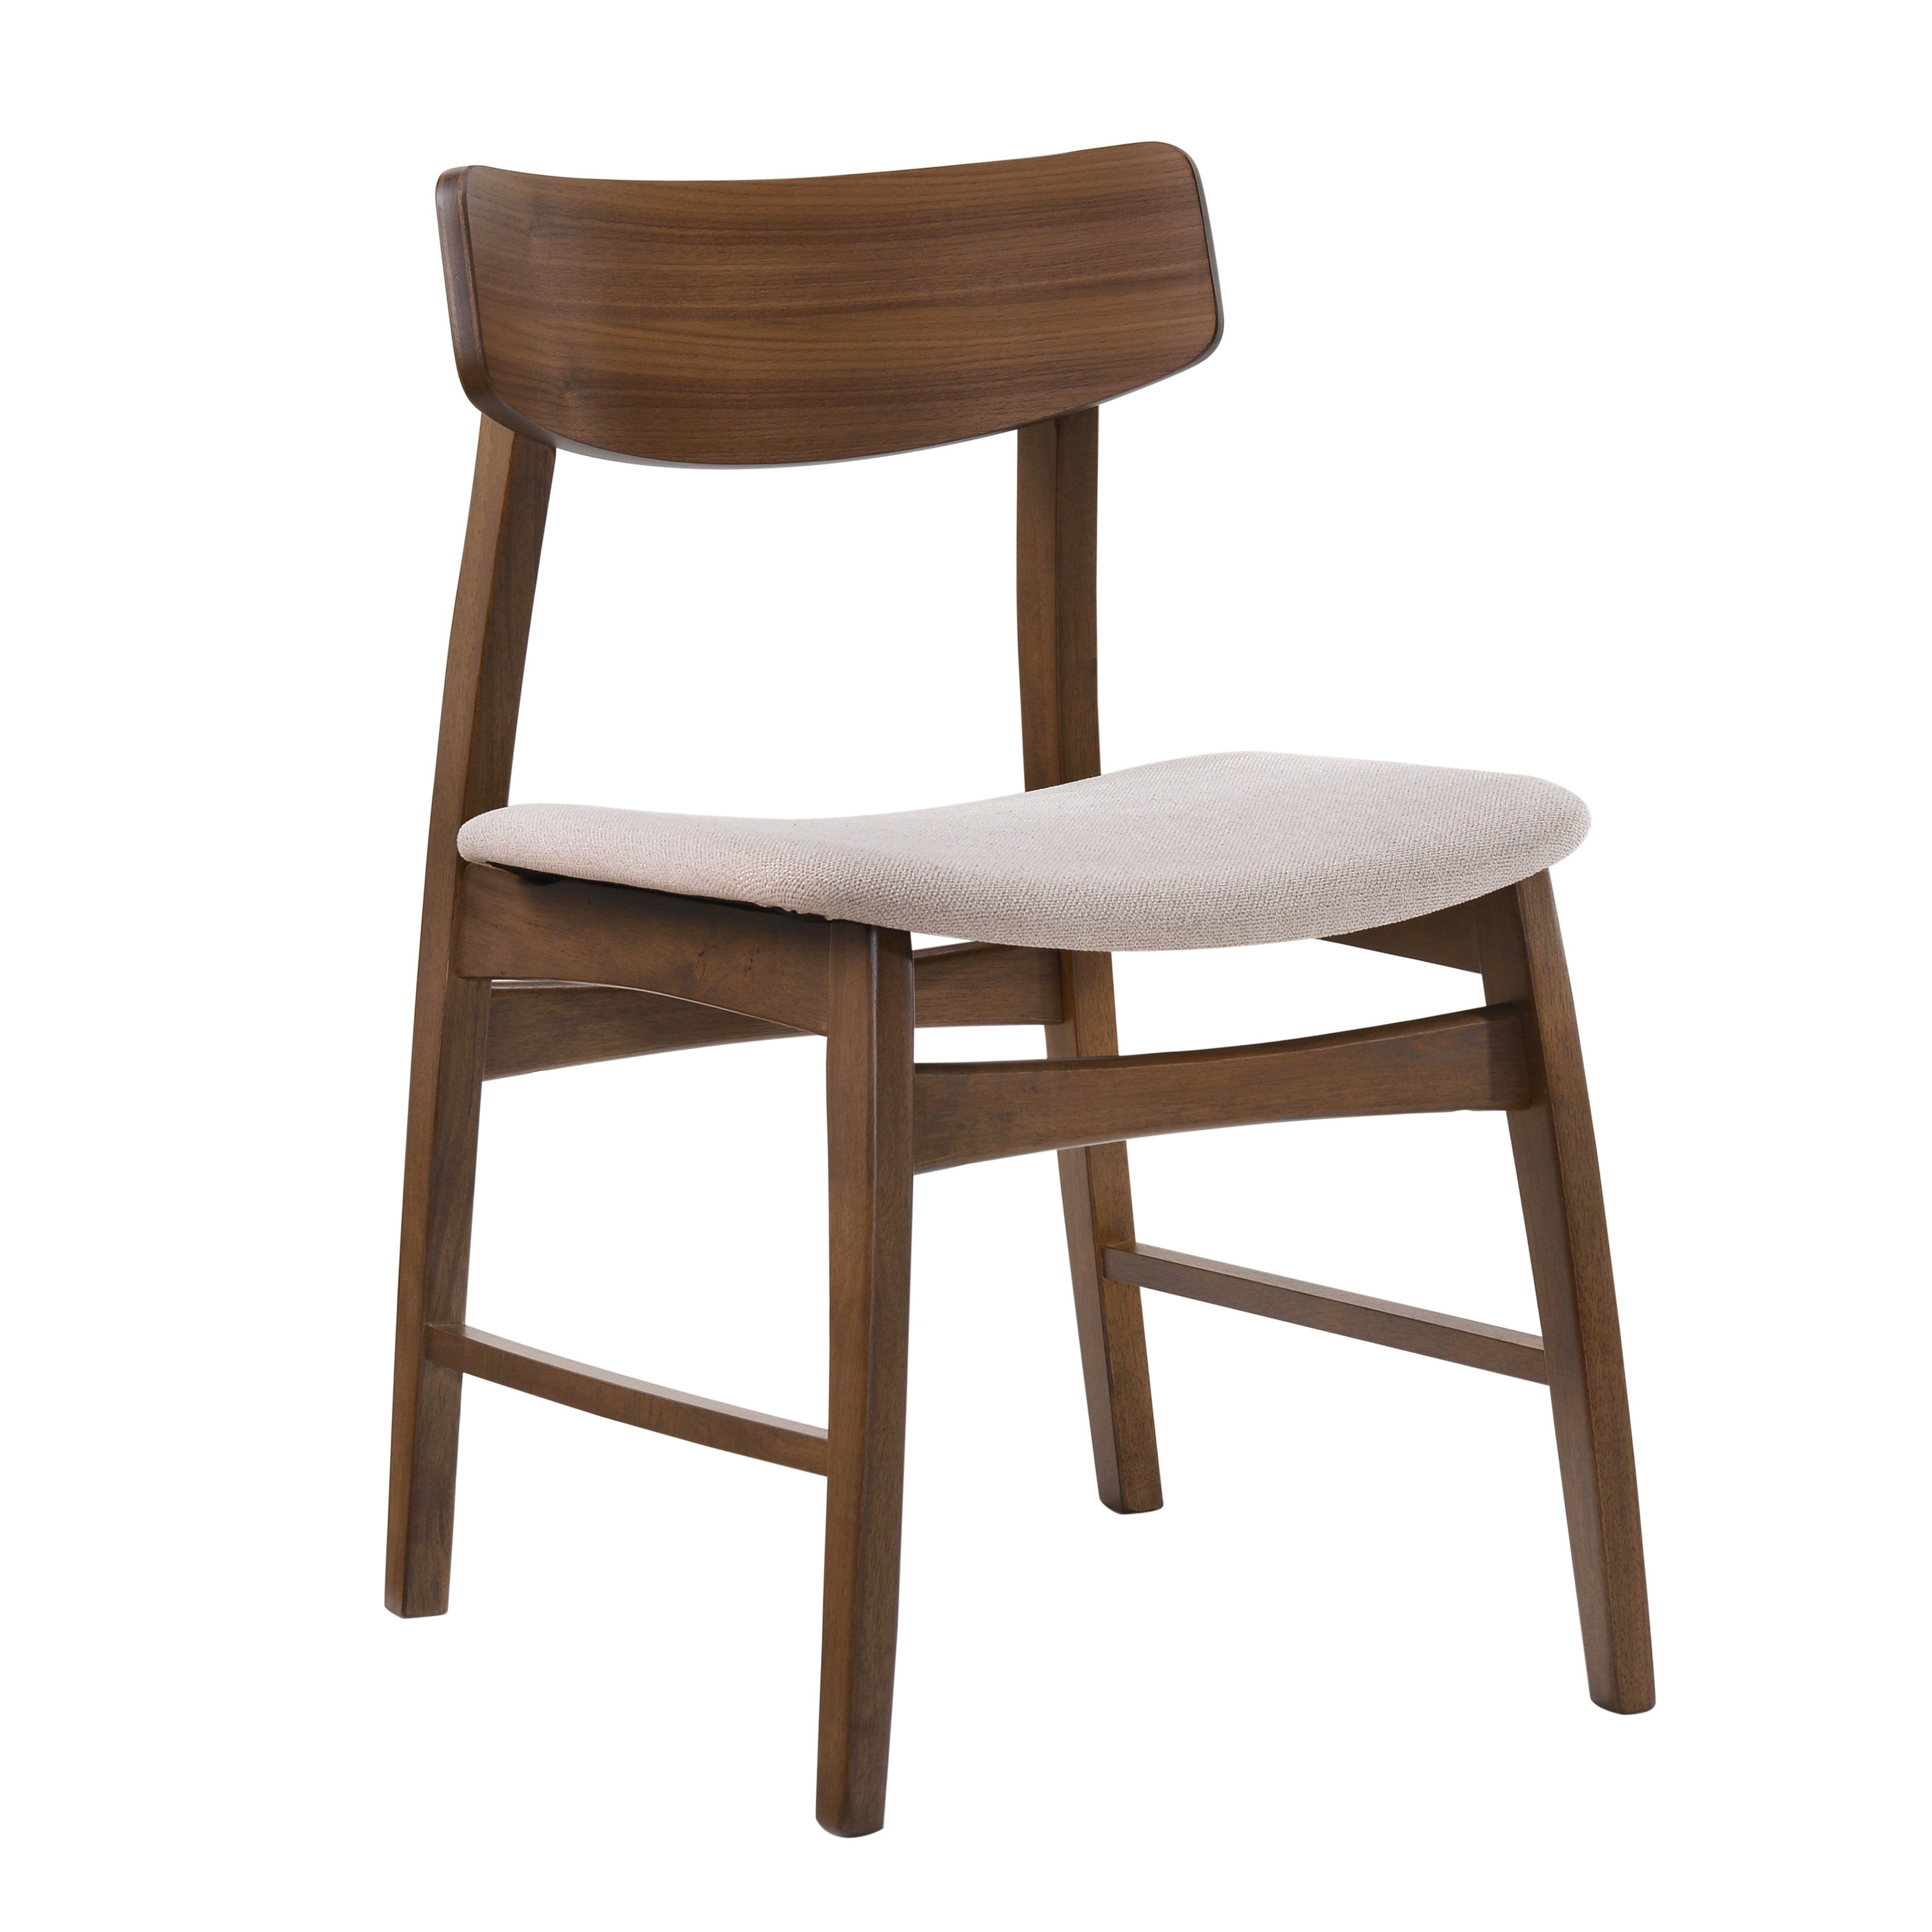 Chanel Dining Chair (Set of 2) - Walnut/Beige